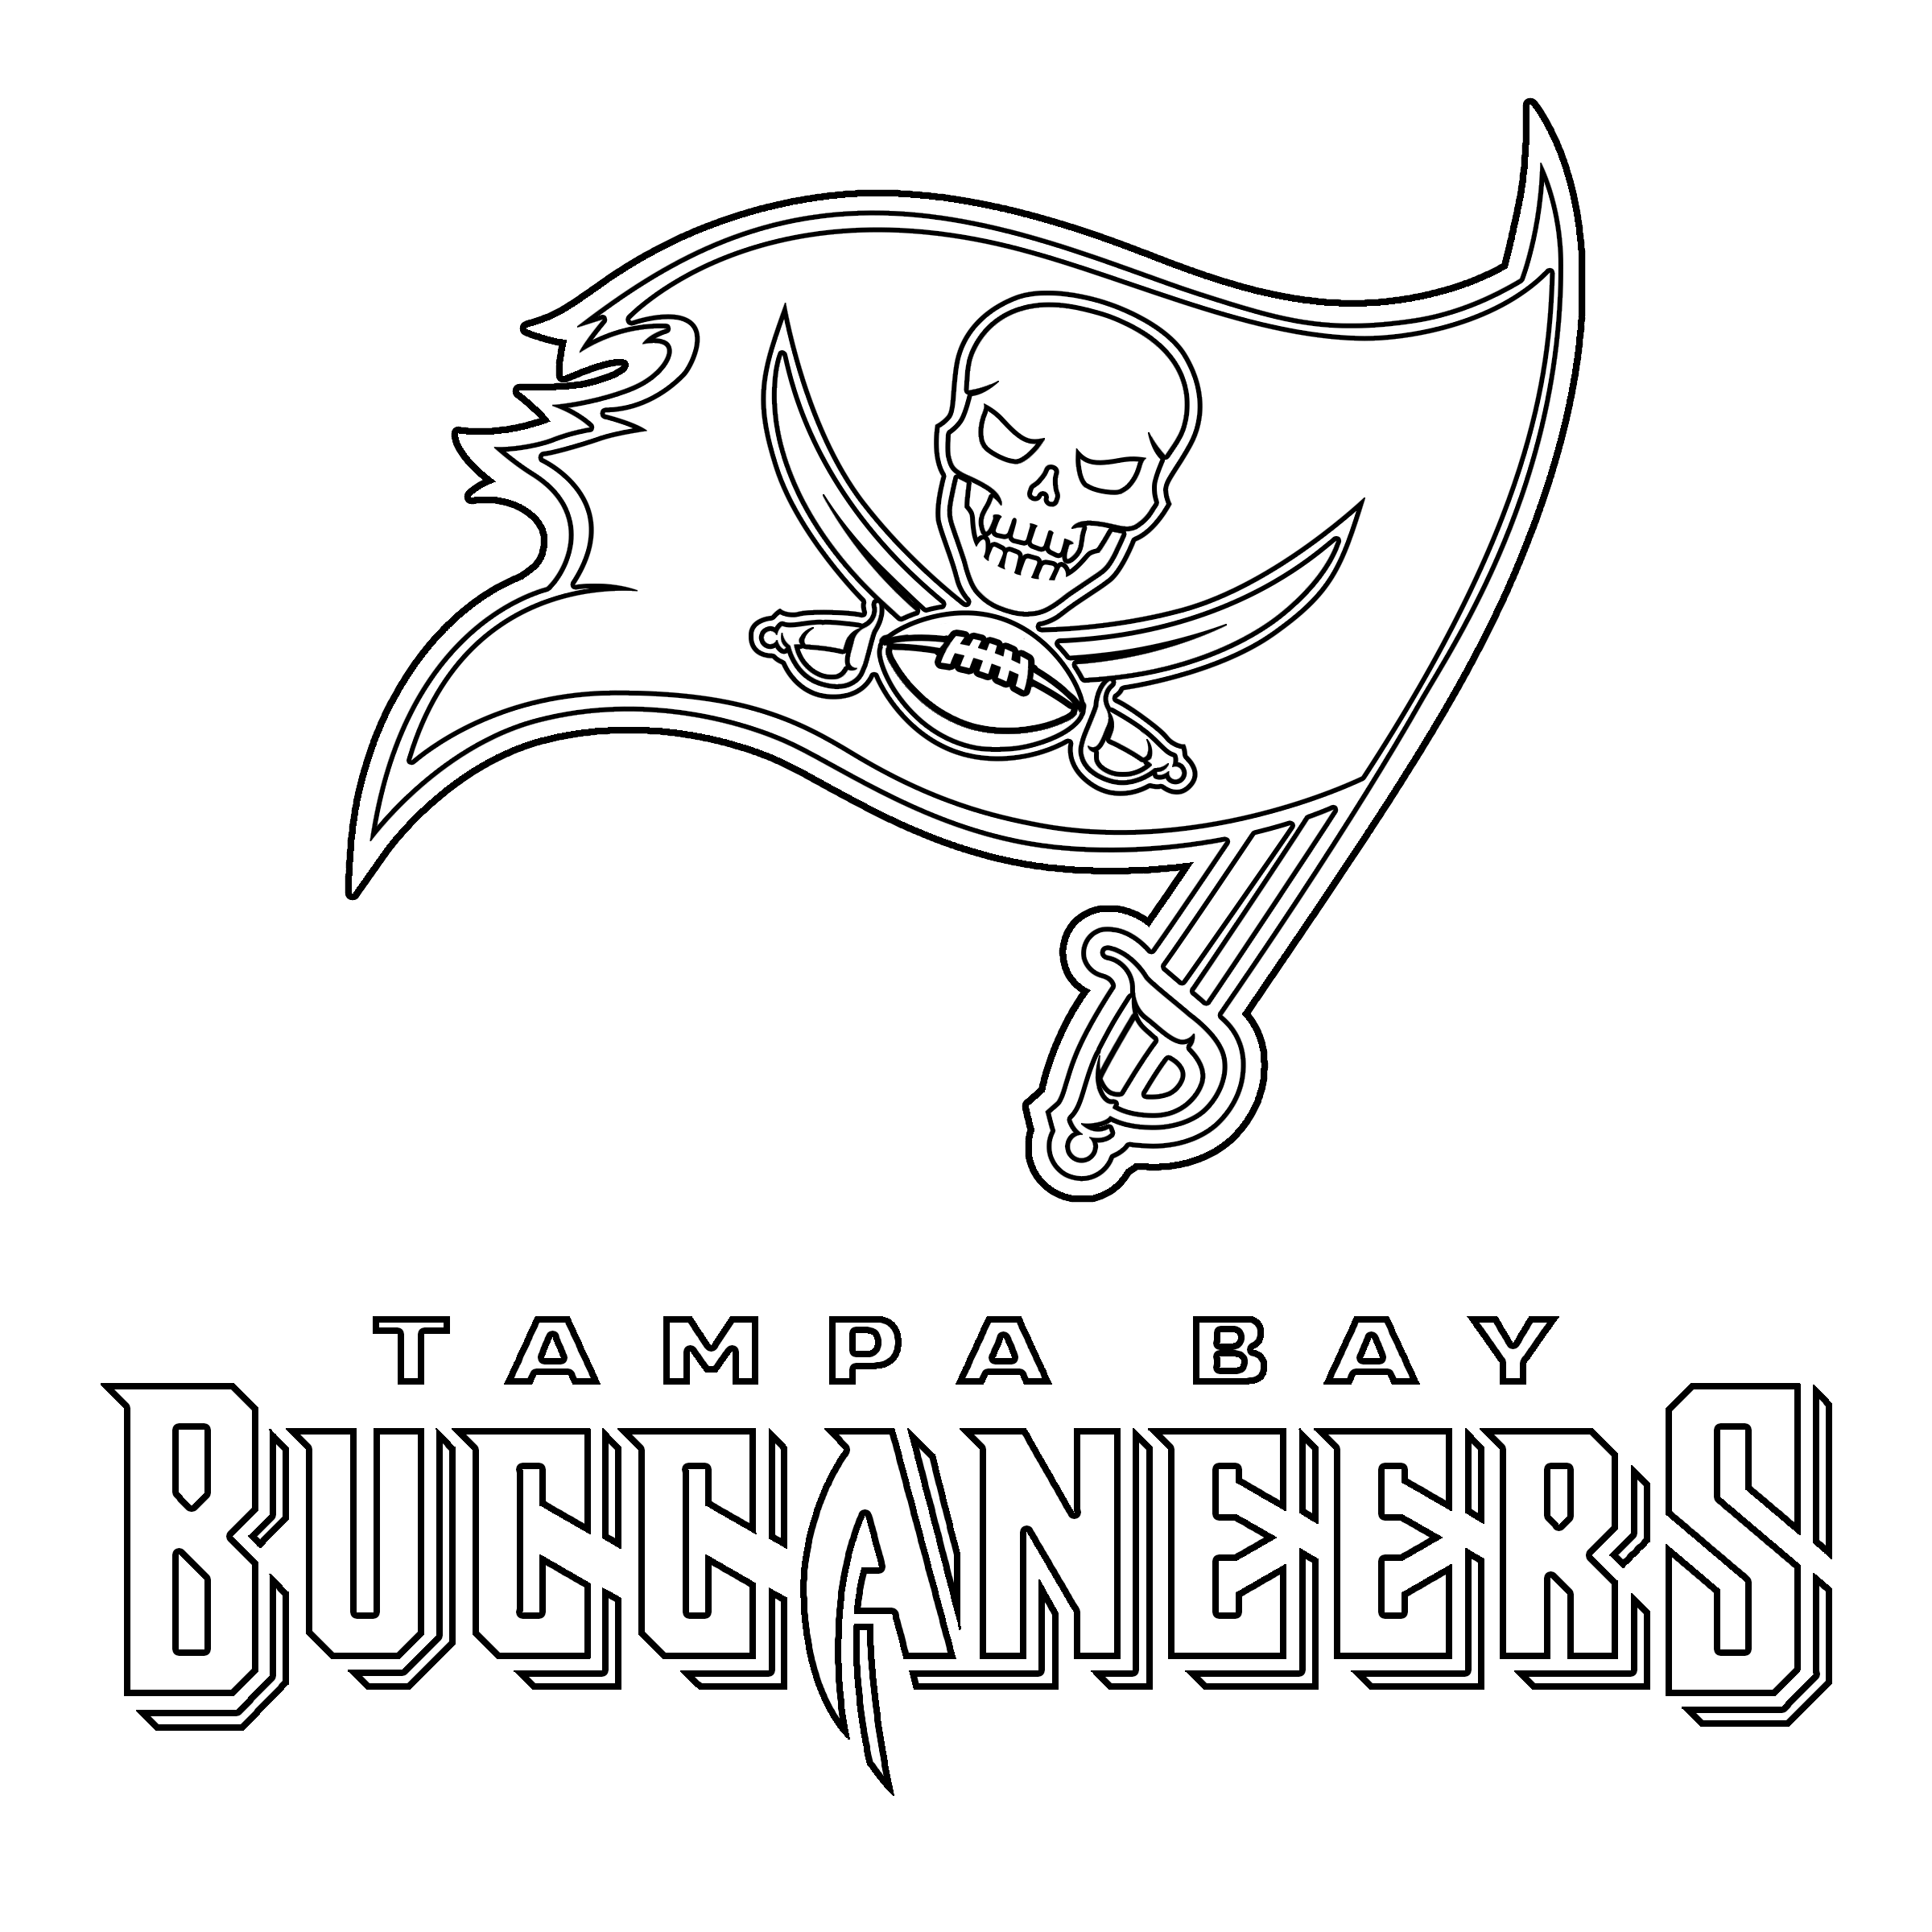 Tampa Bay Buccaneers Logo - Tampa Bay Buccaneers Logo PNG Transparent & SVG Vector